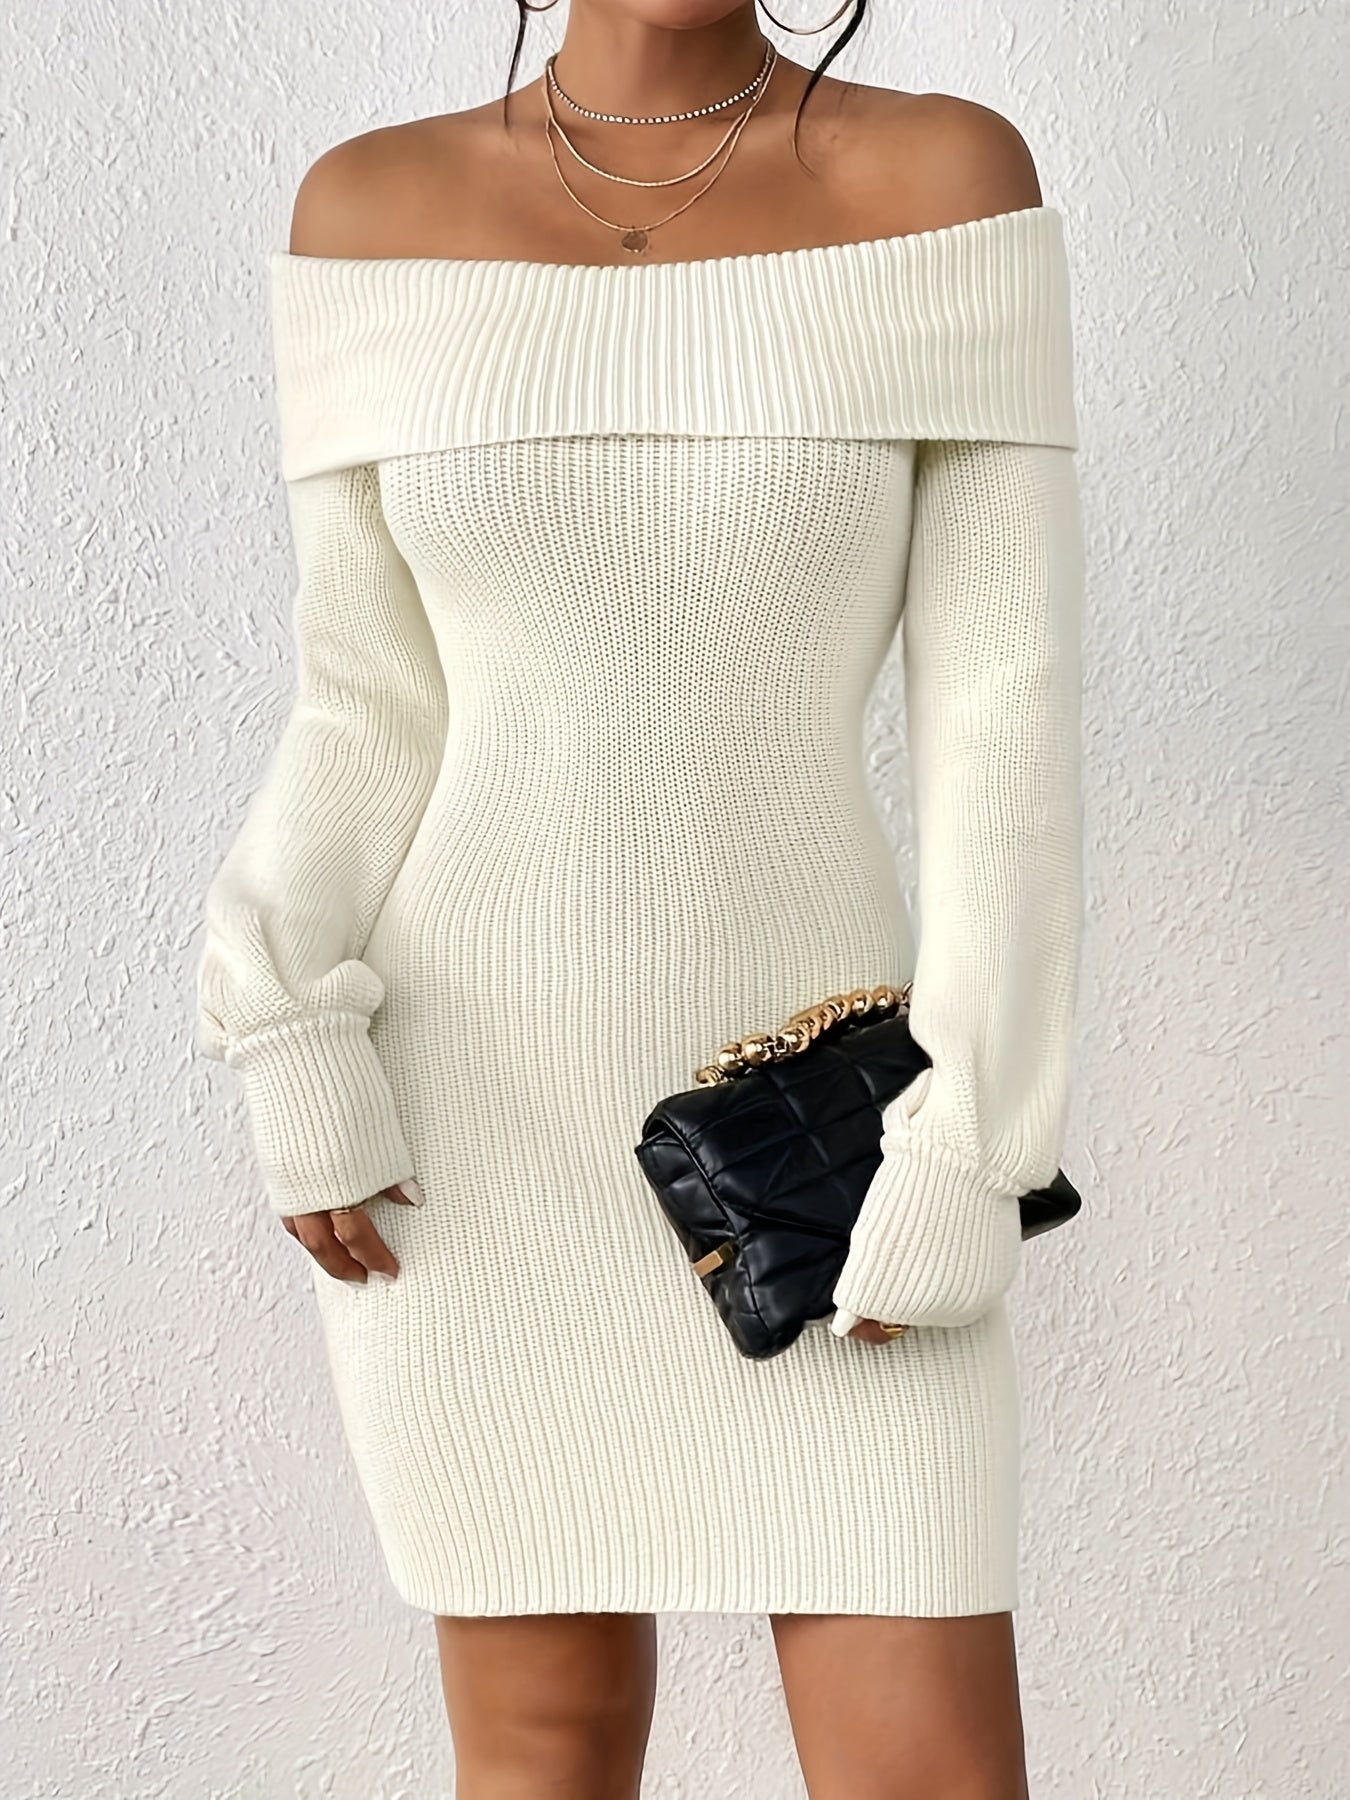 Antmvs Solid Off-shoulder Knit Dress, Elegant Long Sleeve Dress For Fall & Winter, Women's Clothing